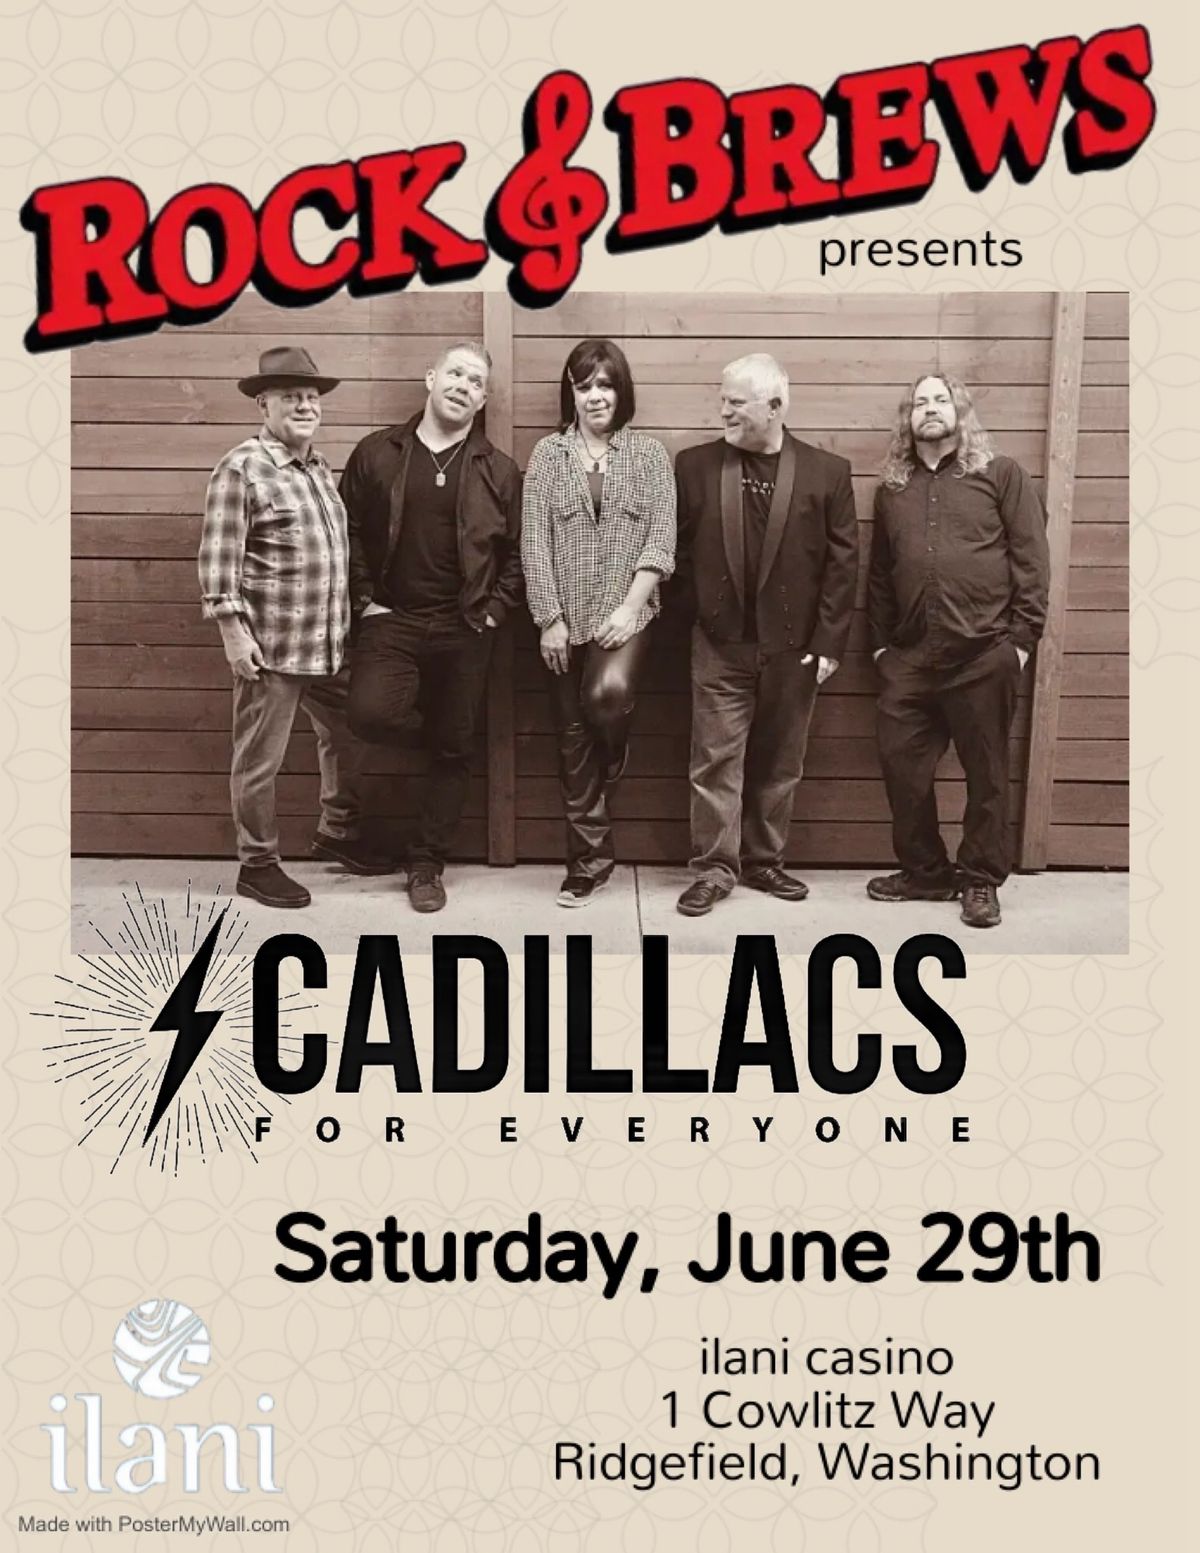 Cadillacs for Everyone @ Rock & Brews